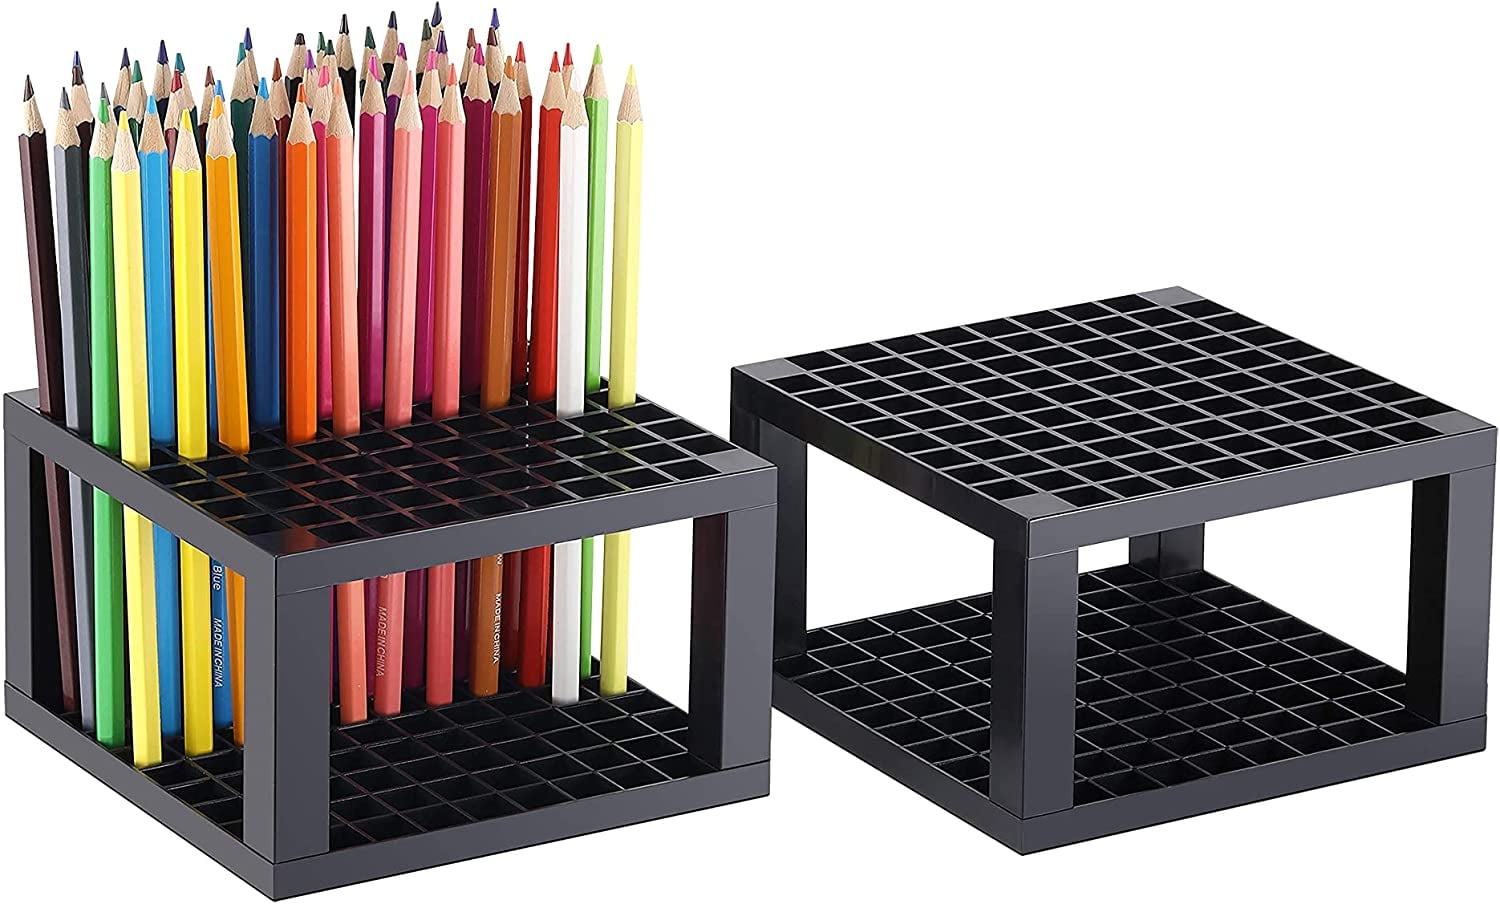 Cute Giant Crayon Pencil Desk Accessories Holder - Peachymart